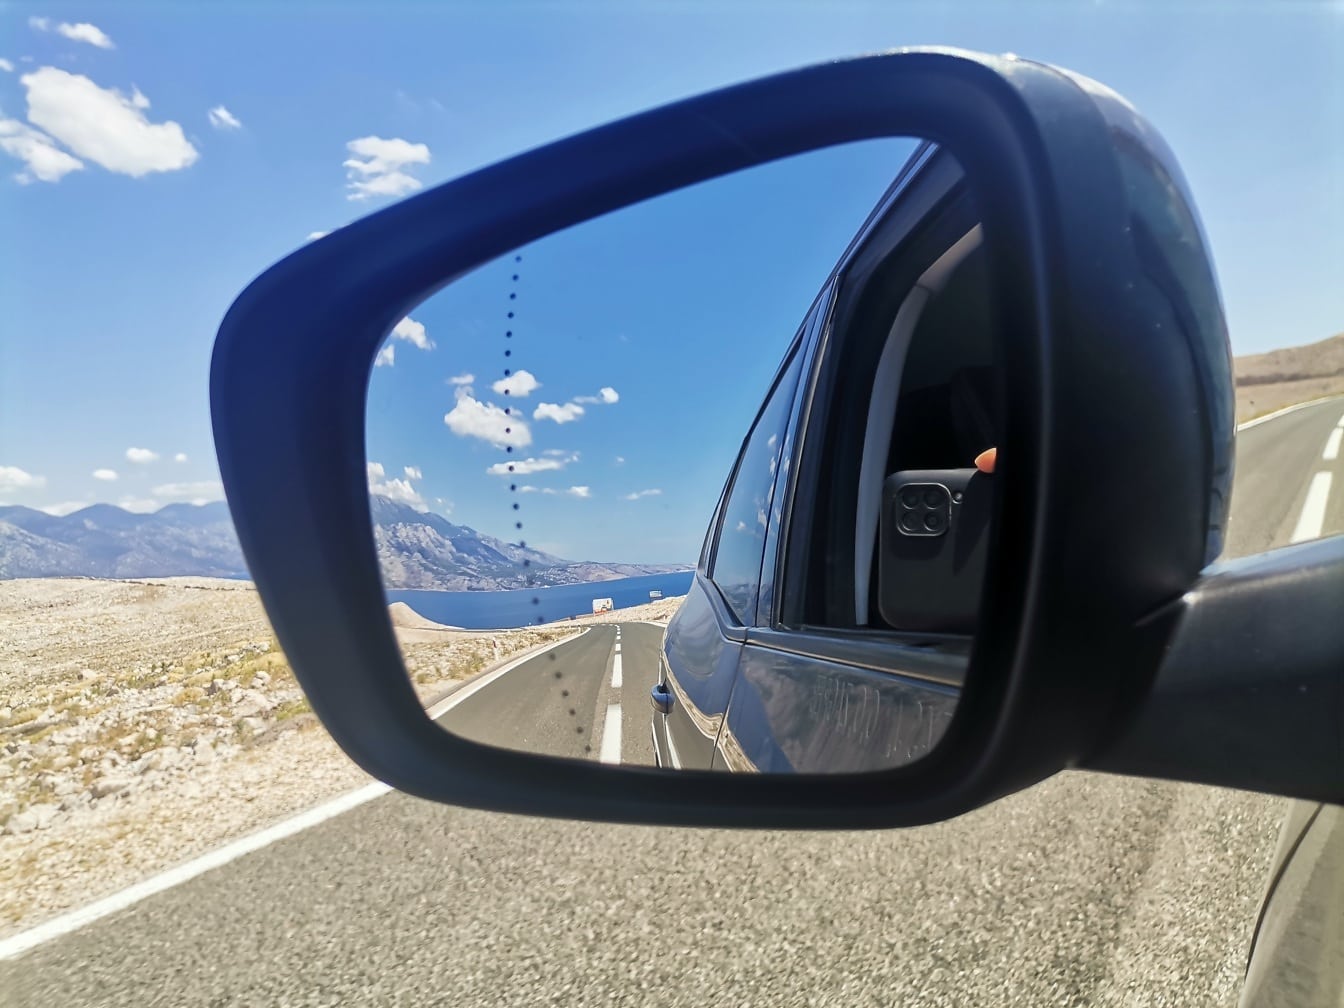 Asfaltweg en zeegezicht reflectie in autospiegel